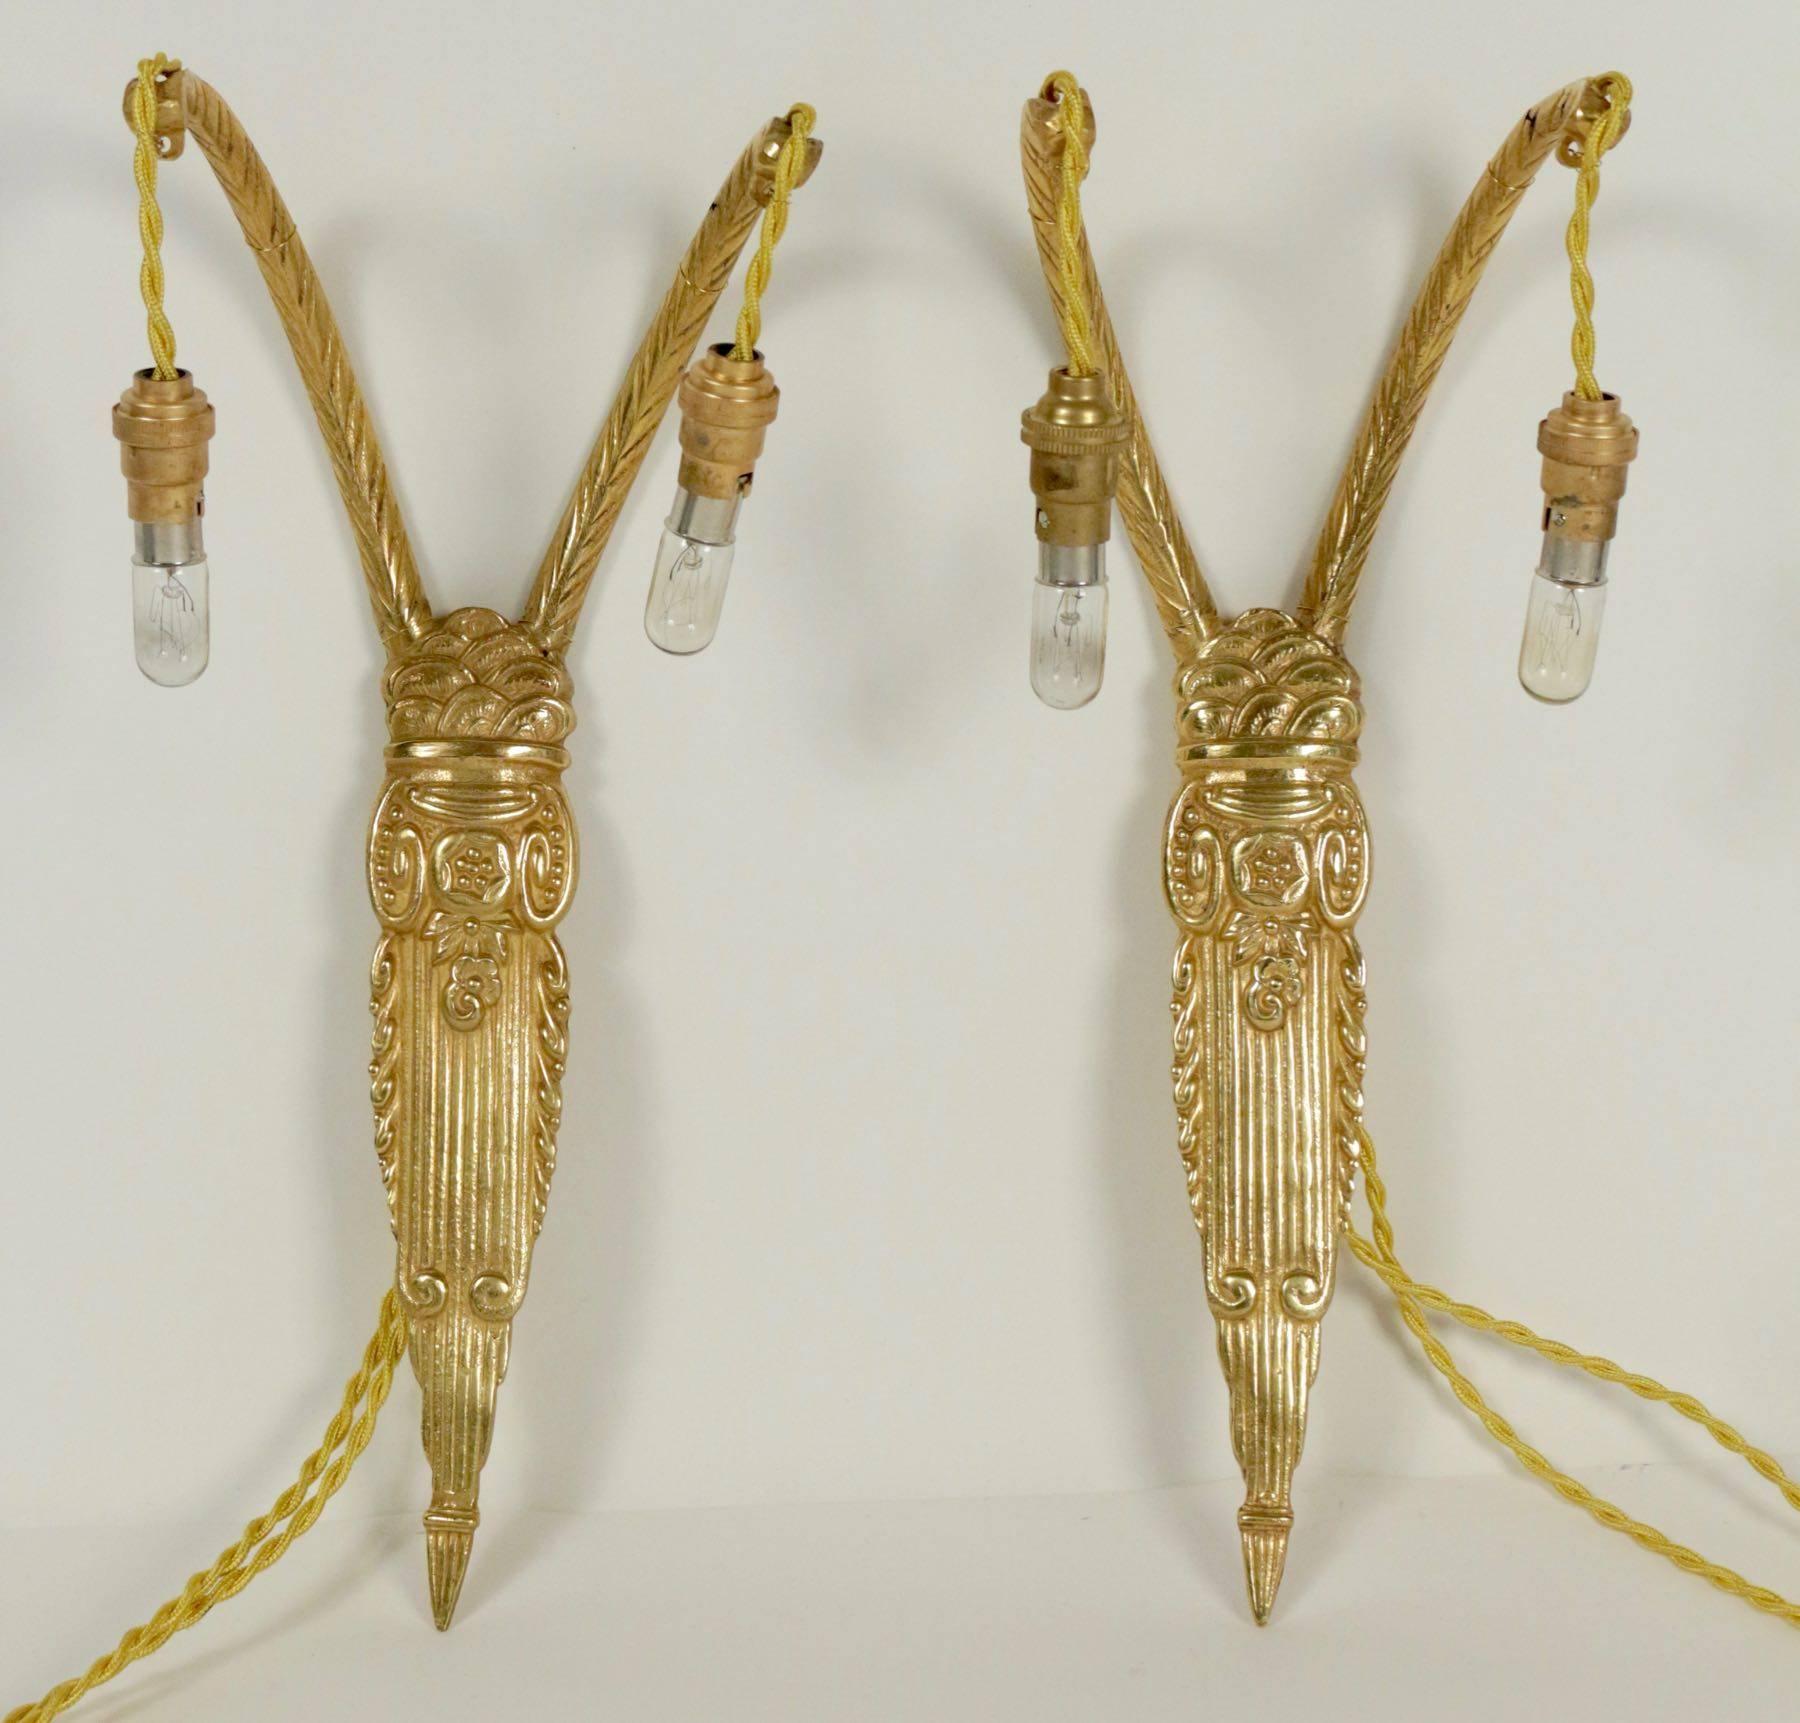 A pair of lamps 1930, Art Deco period, Antique, two lights, gilded bronze. 
Measures: H 35cm, W 16cm, W 12cm.